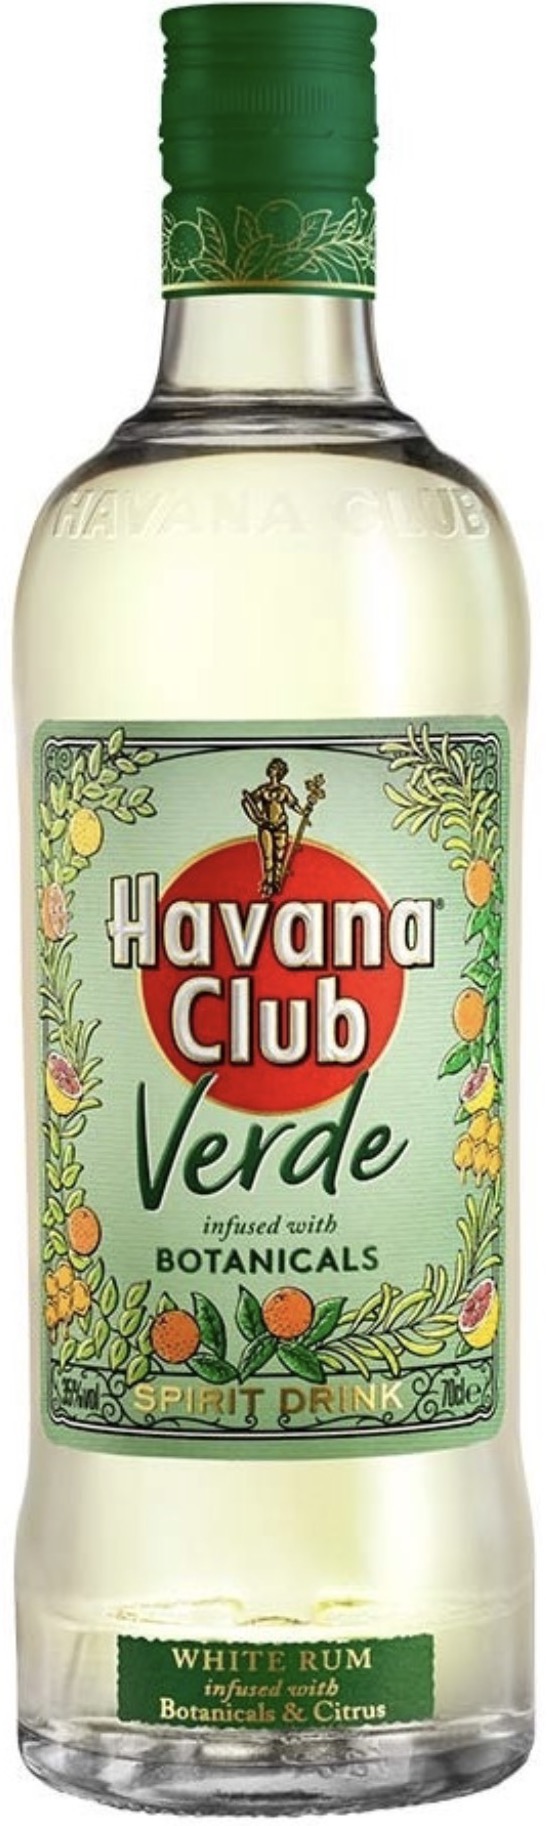 Havana Club Verde Botanicals 35 % vol 0,7l